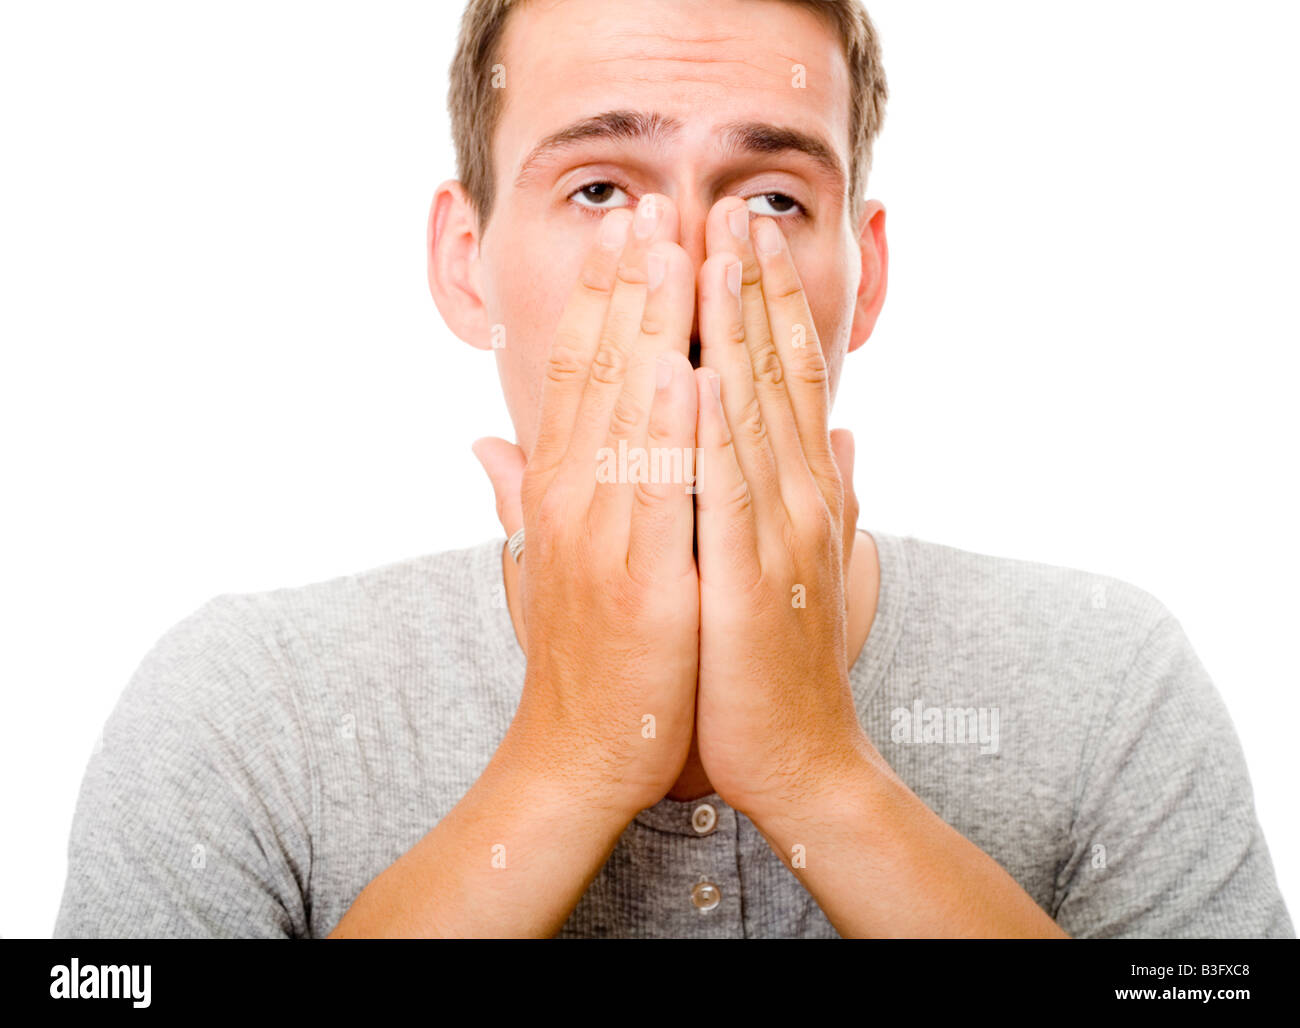 man weeping Stock Photo